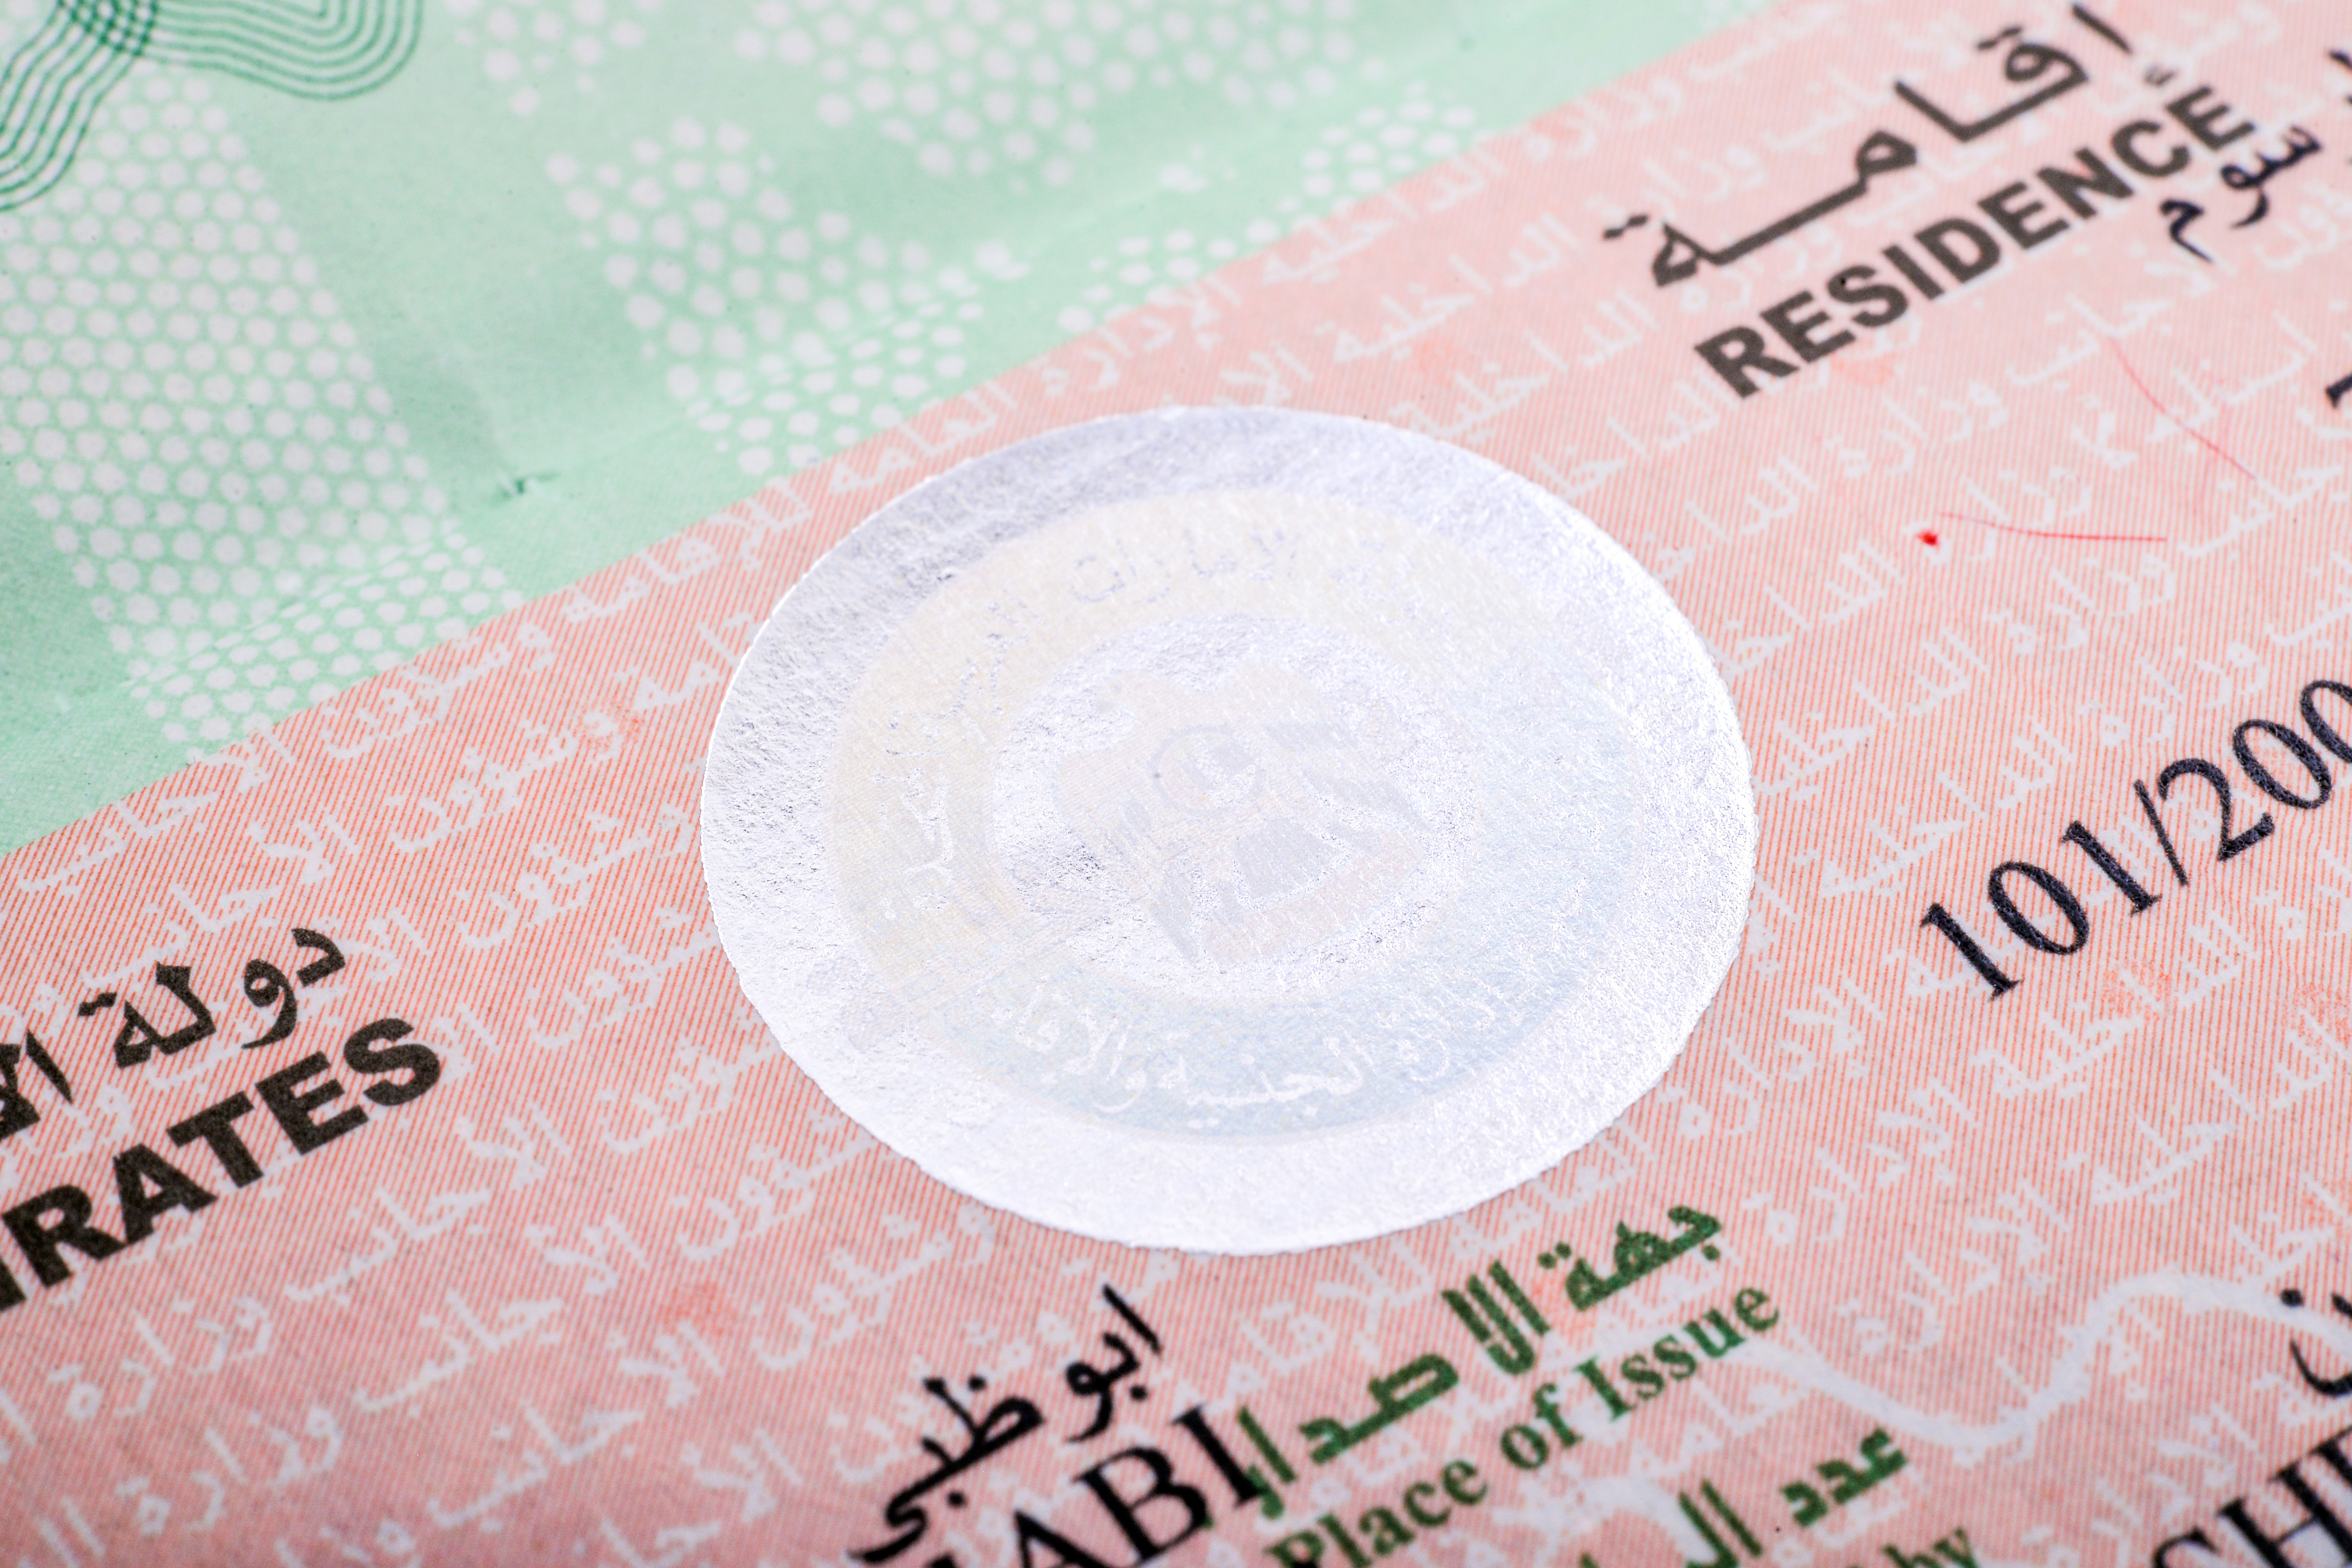 виза в ОАЭ для трудоустройства